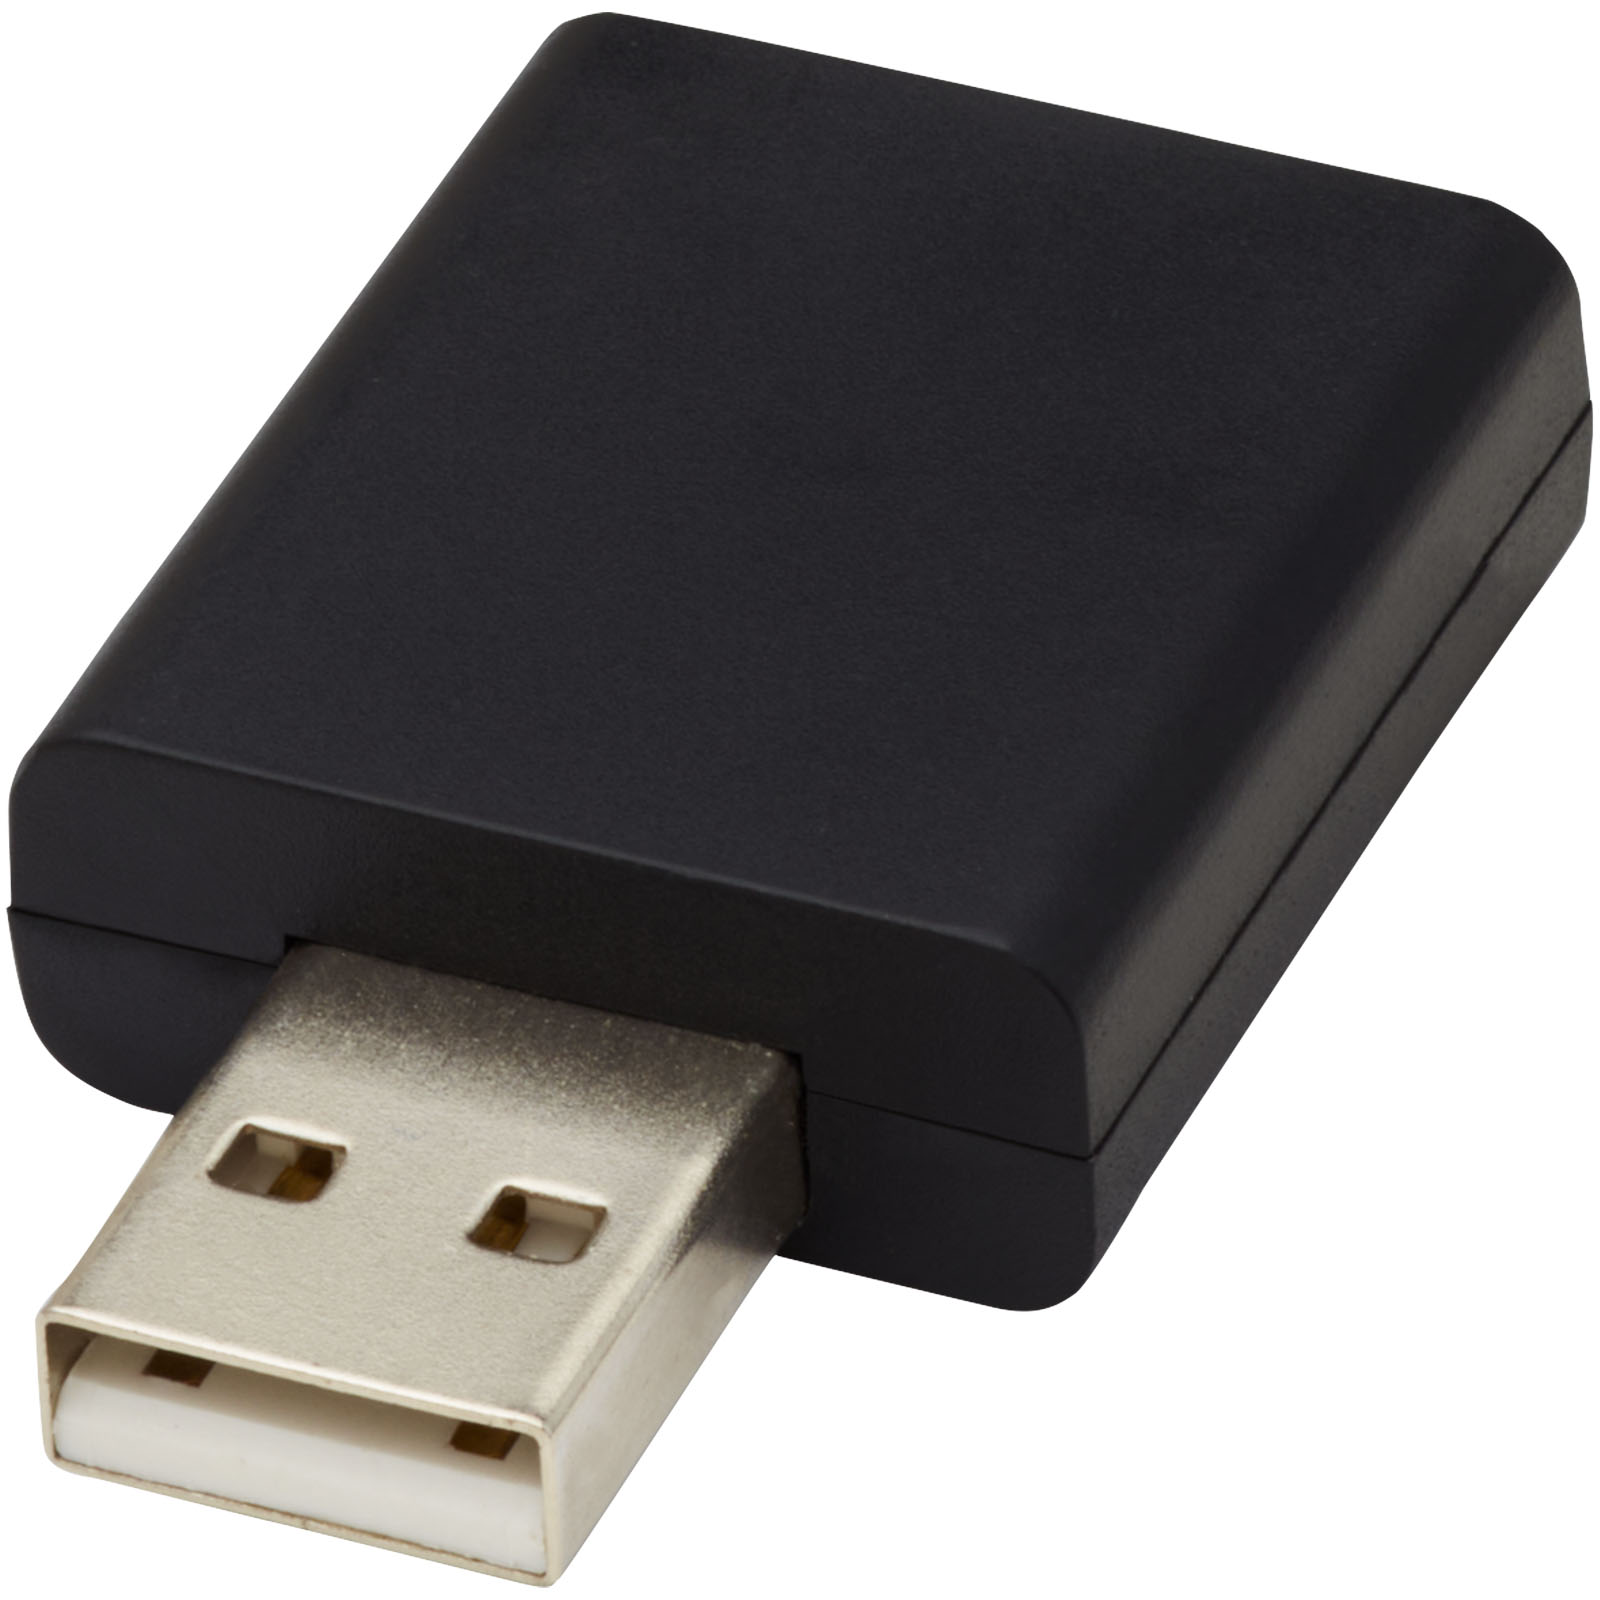 DataGuard USB - Pequeño Clacton - Moros